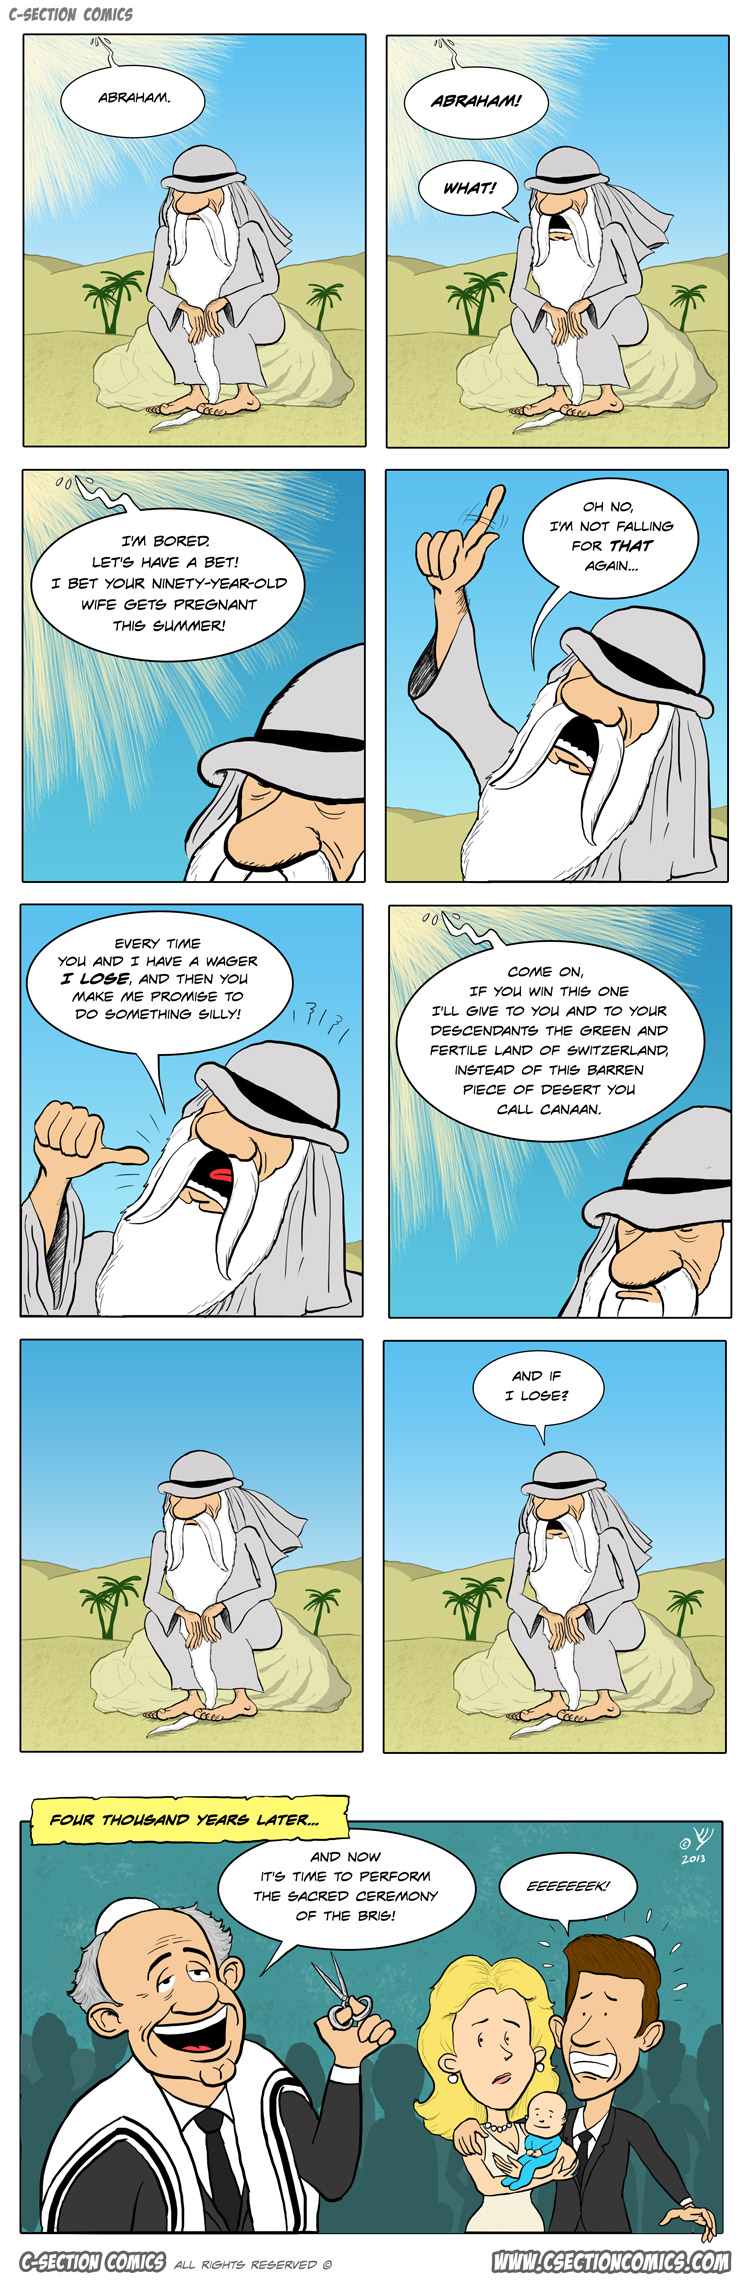 God Trolls Abraham - a Cartoon by C-Section Comics